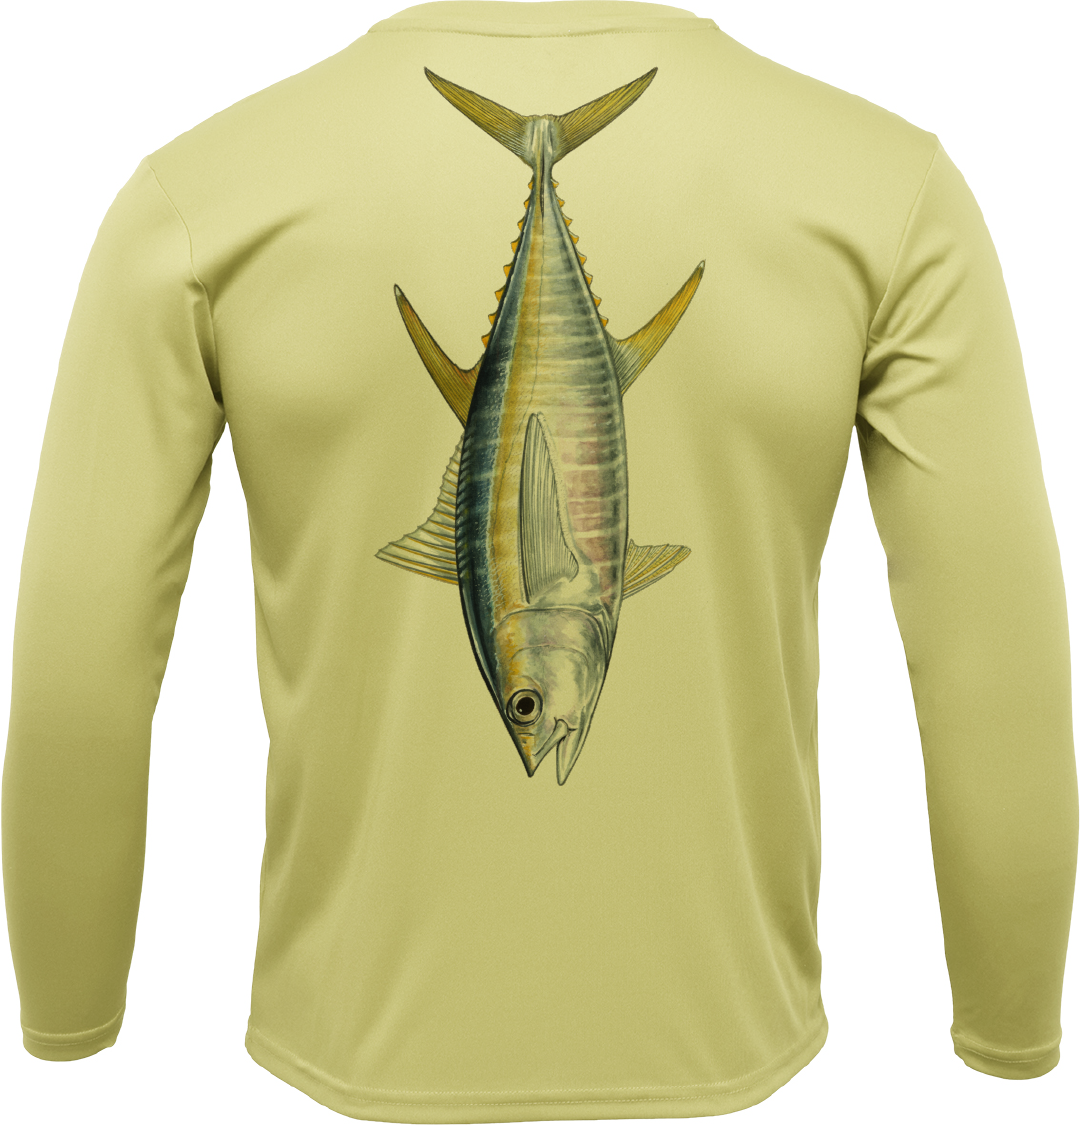 Camiseta de manga larga USA Tuna UPF 50+ Dry-Fit